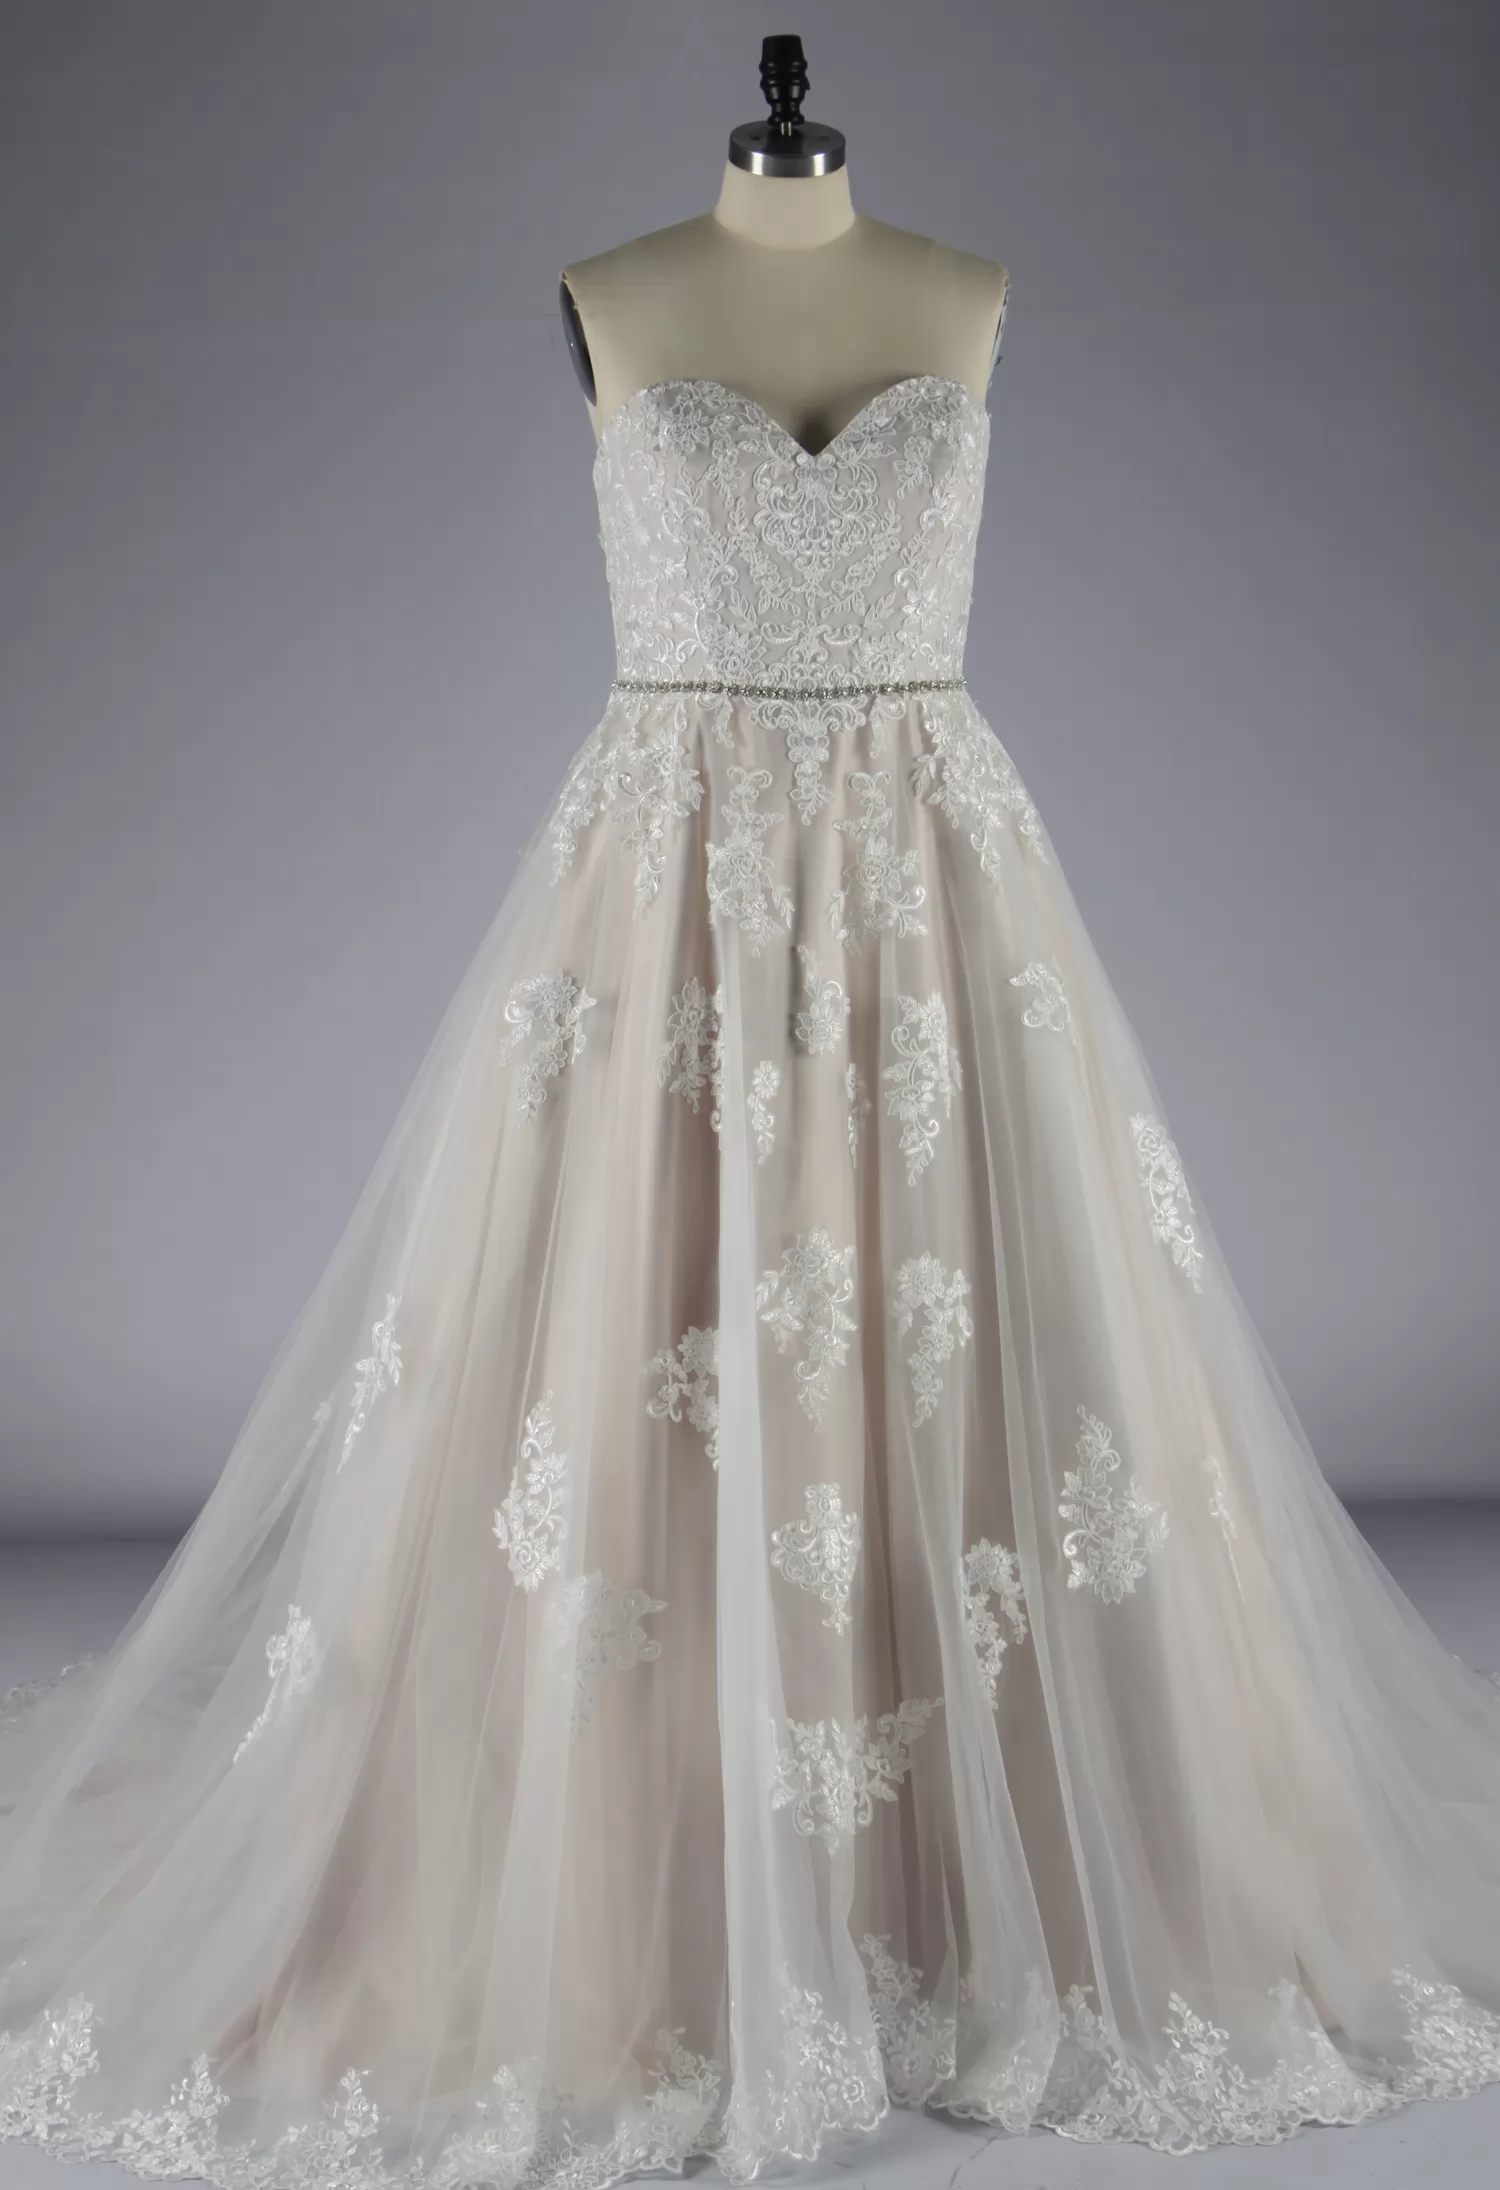 Blush Strapless Ballgown Wedding Dress With Lace Motifs